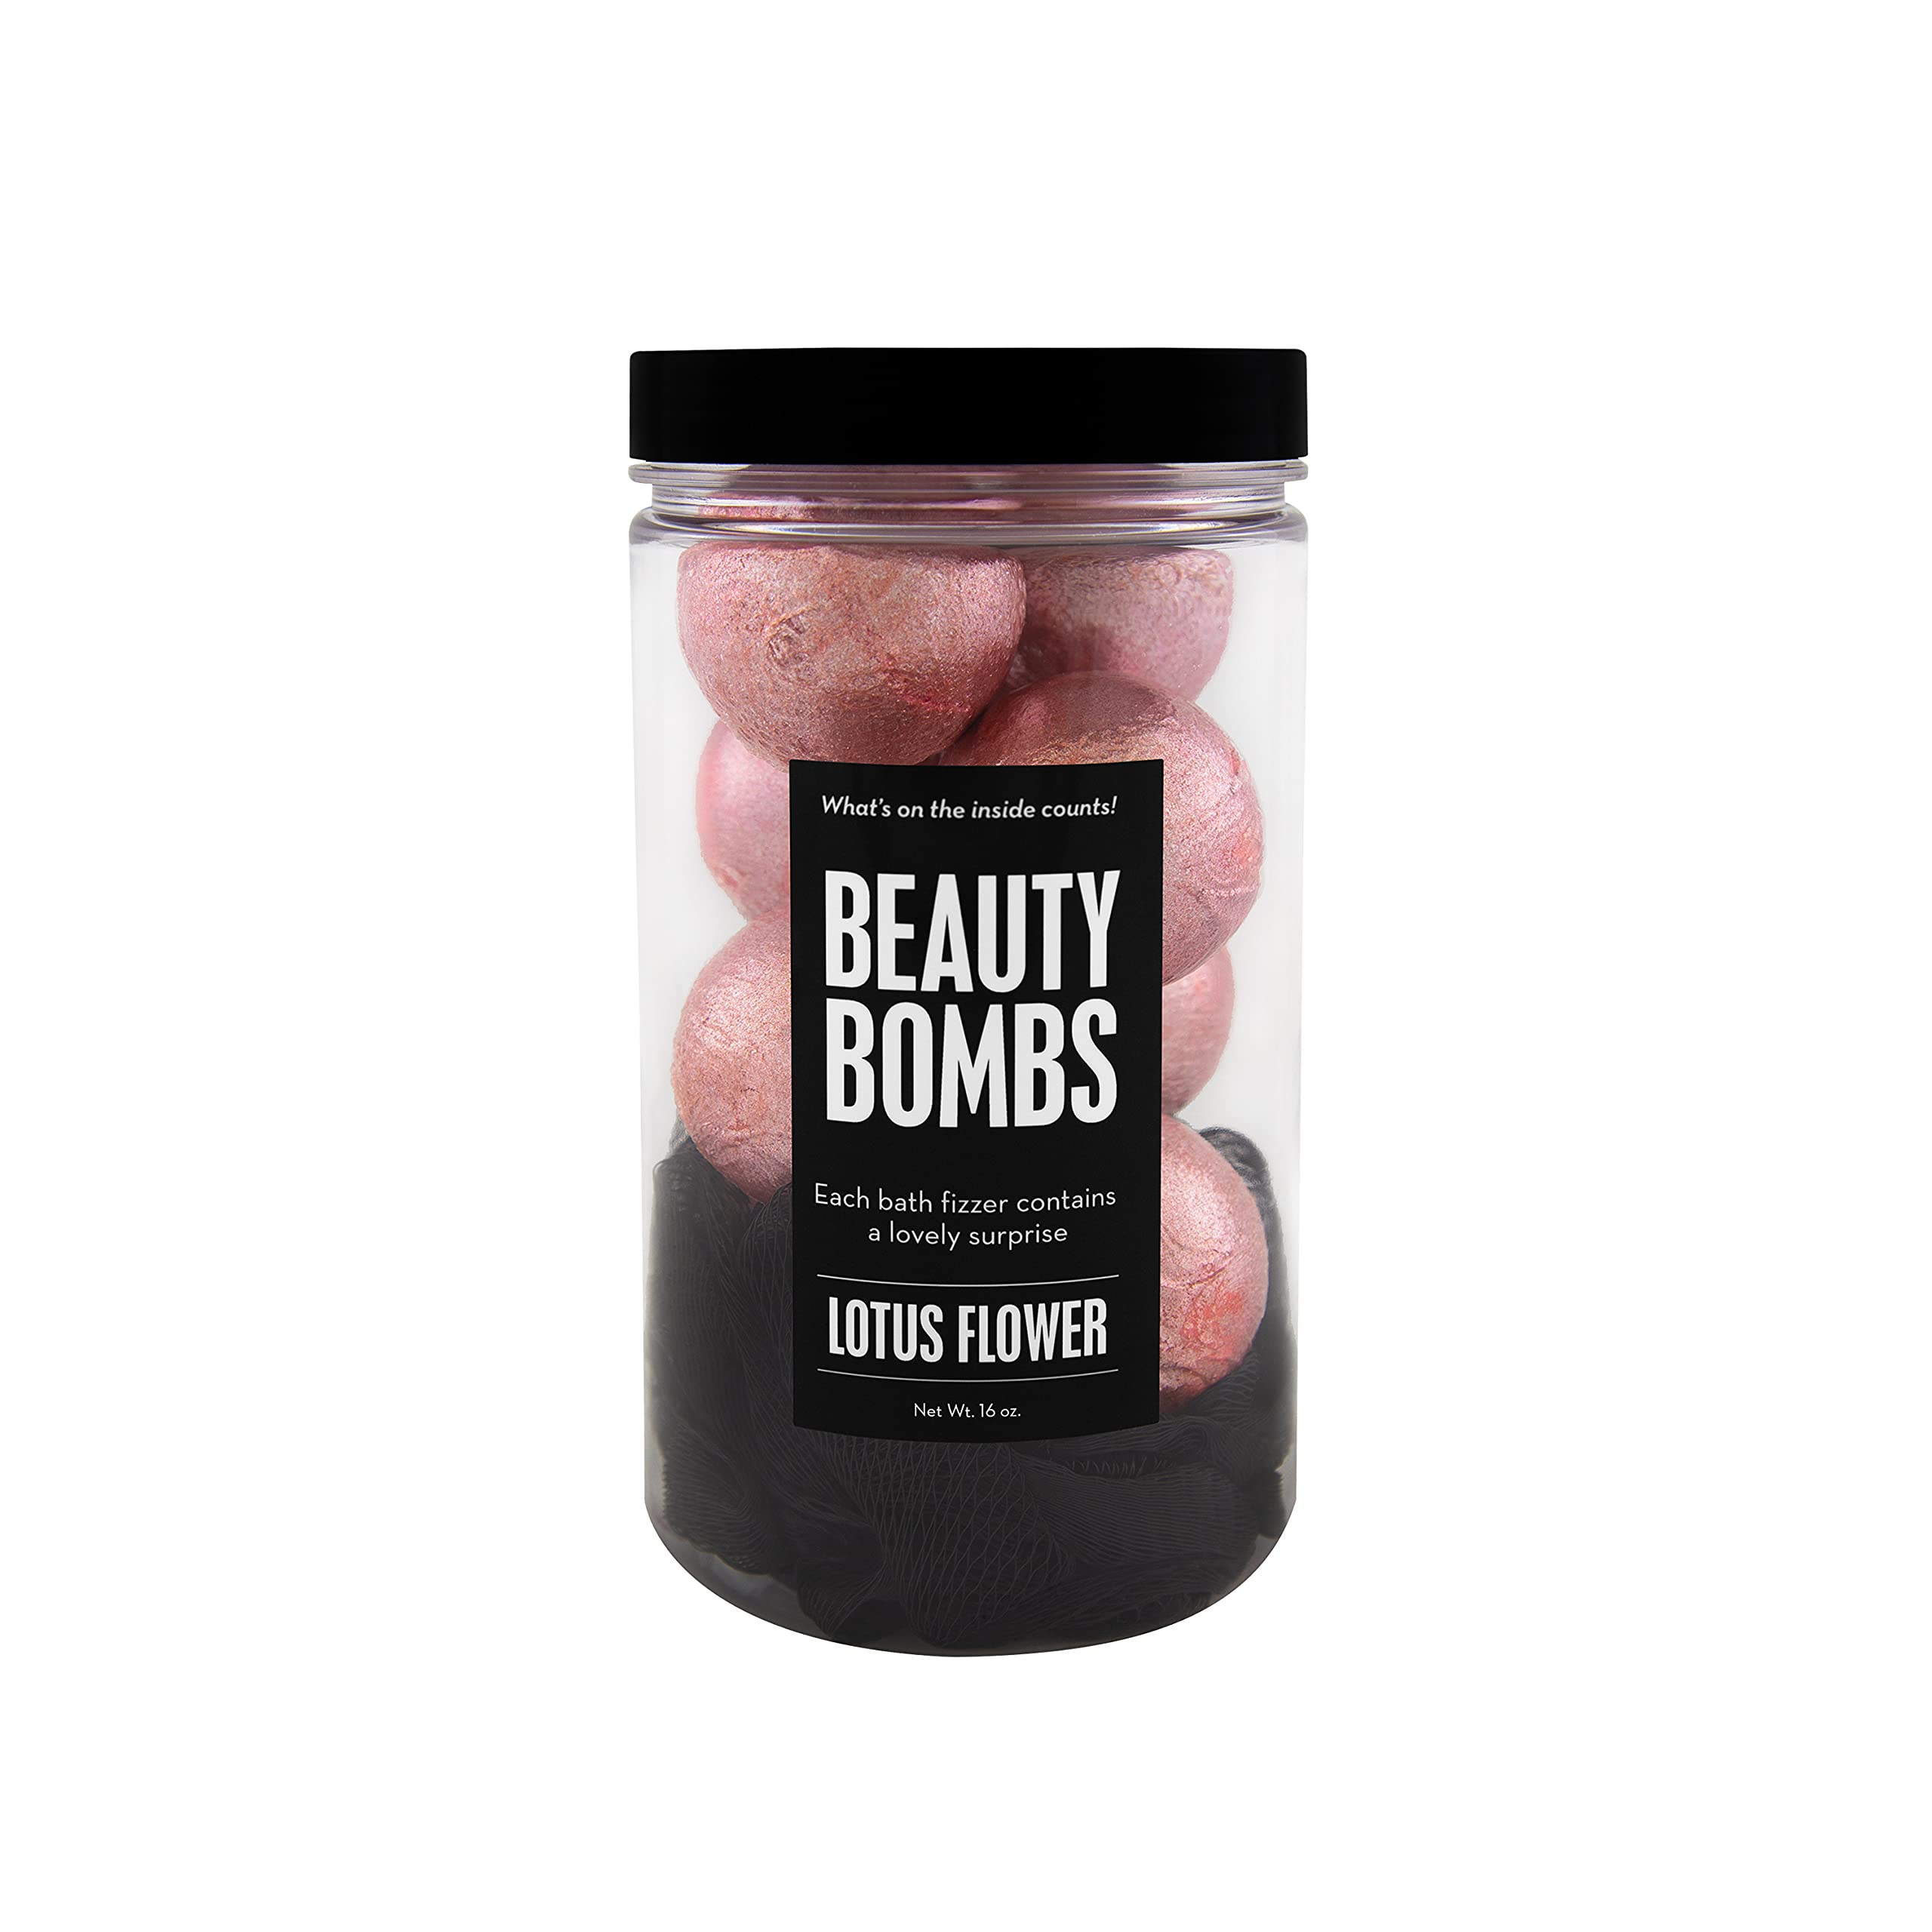 DA BOMB Beauty Bath Bombs Jar, 16oz, 8 minis with loofah